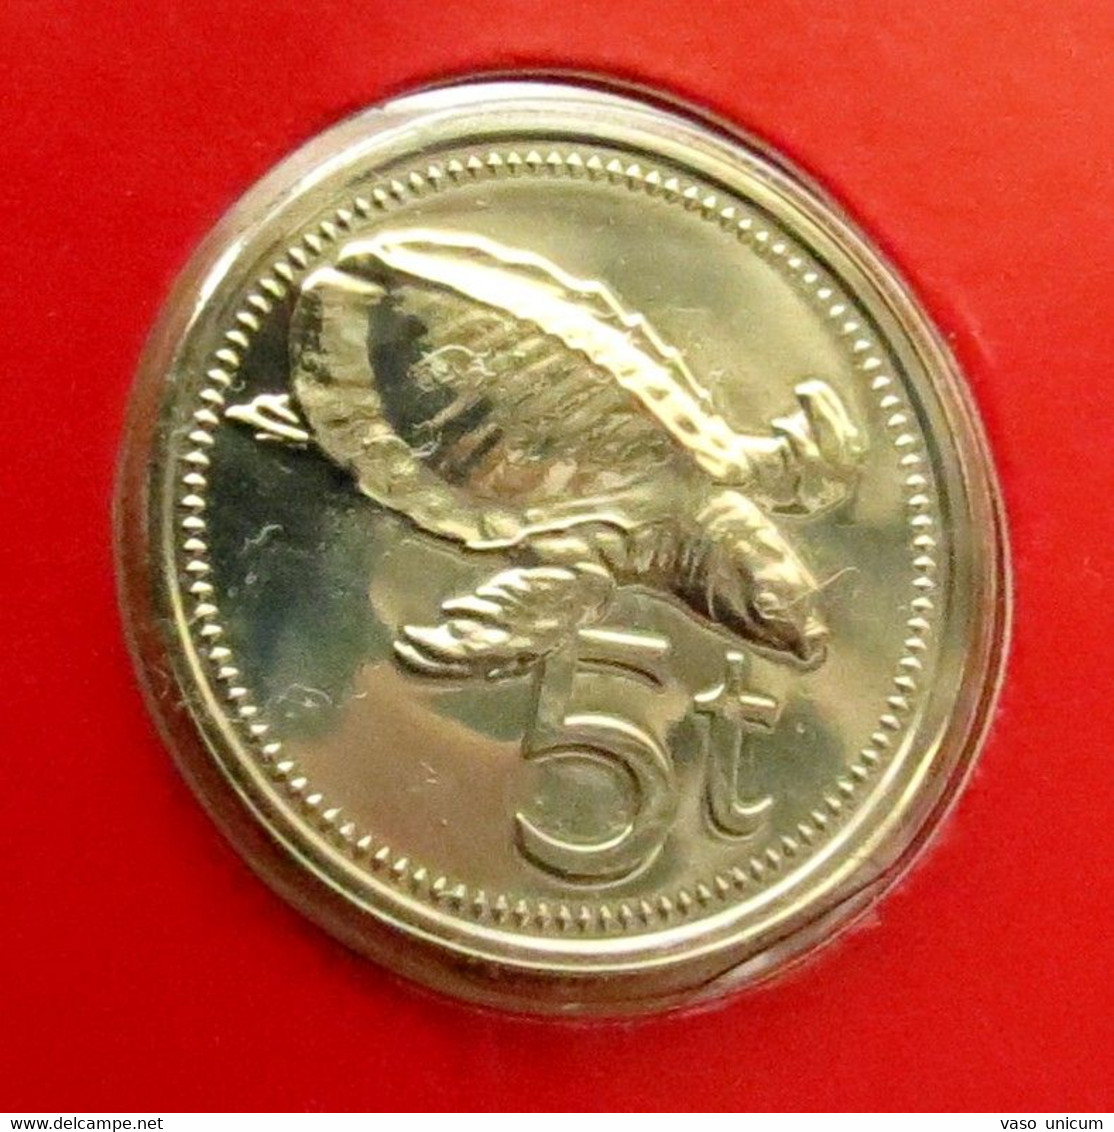 Papua New Guinea 5 Toea 1977 UNC - Minted 603 Coins Only - Papua-Neuguinea